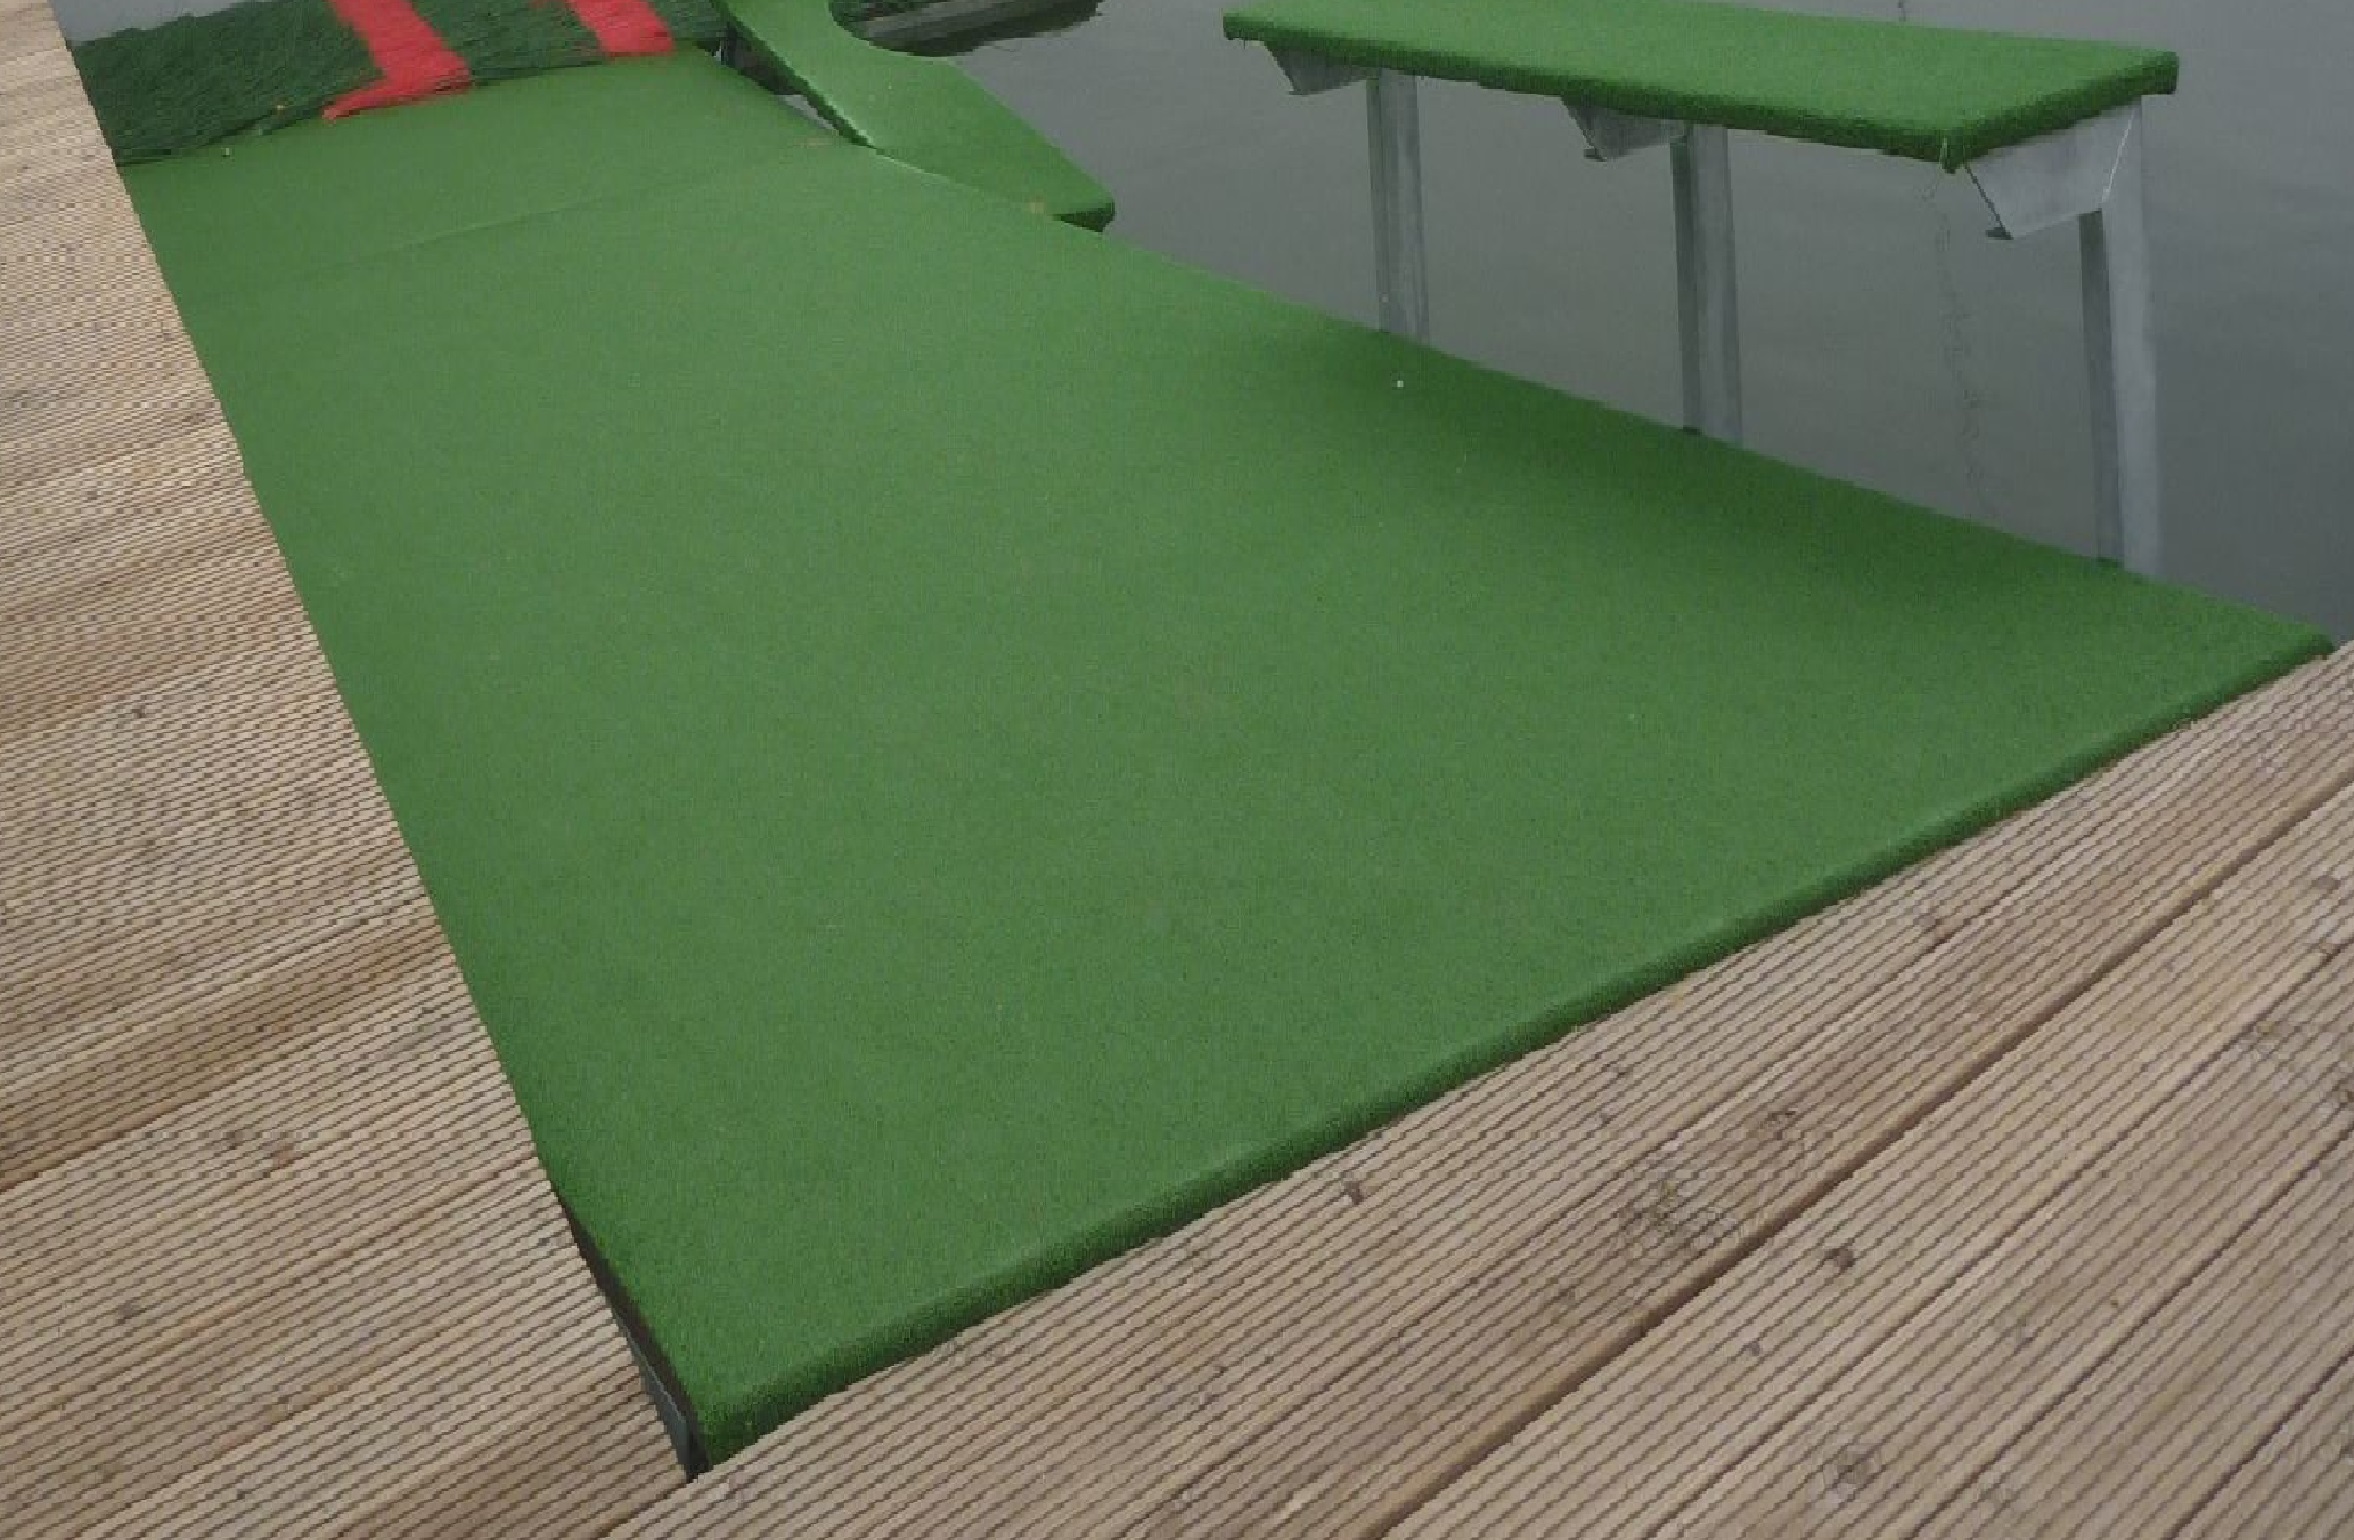 Carpet for starting ramp, green